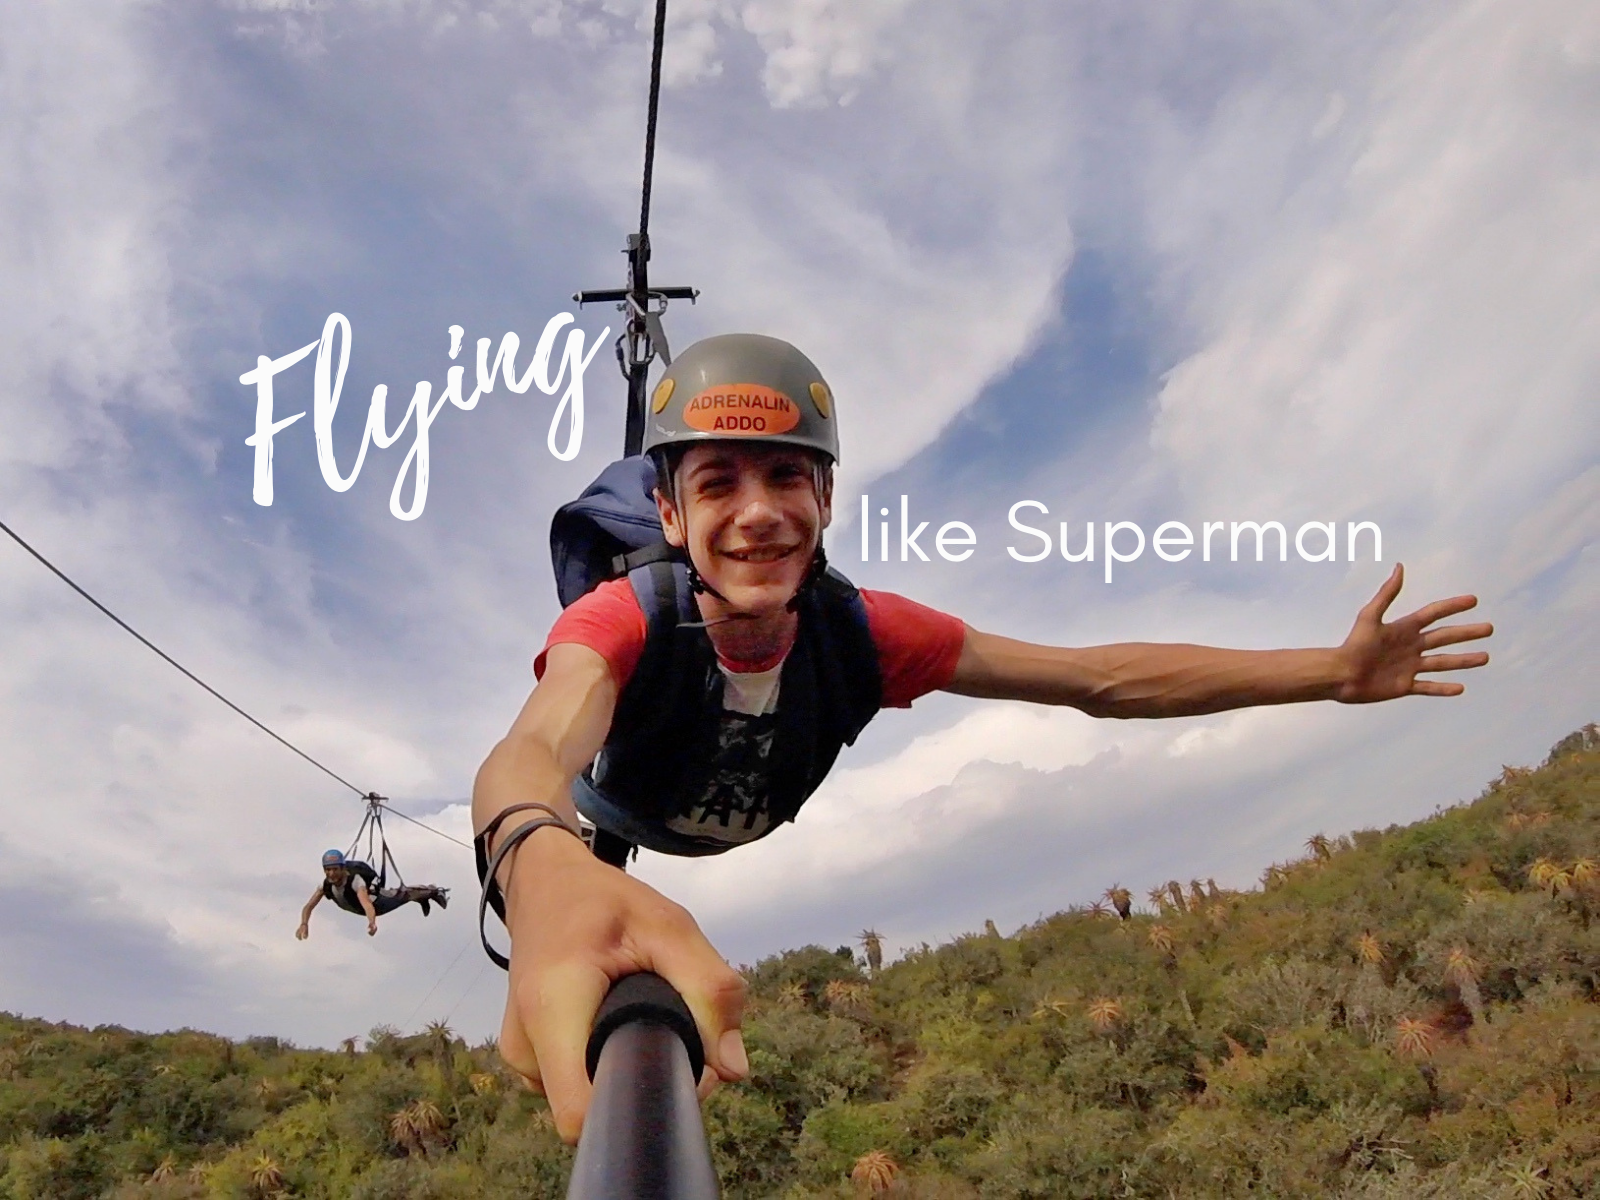 Flying like Superman at Adrenalin Addo